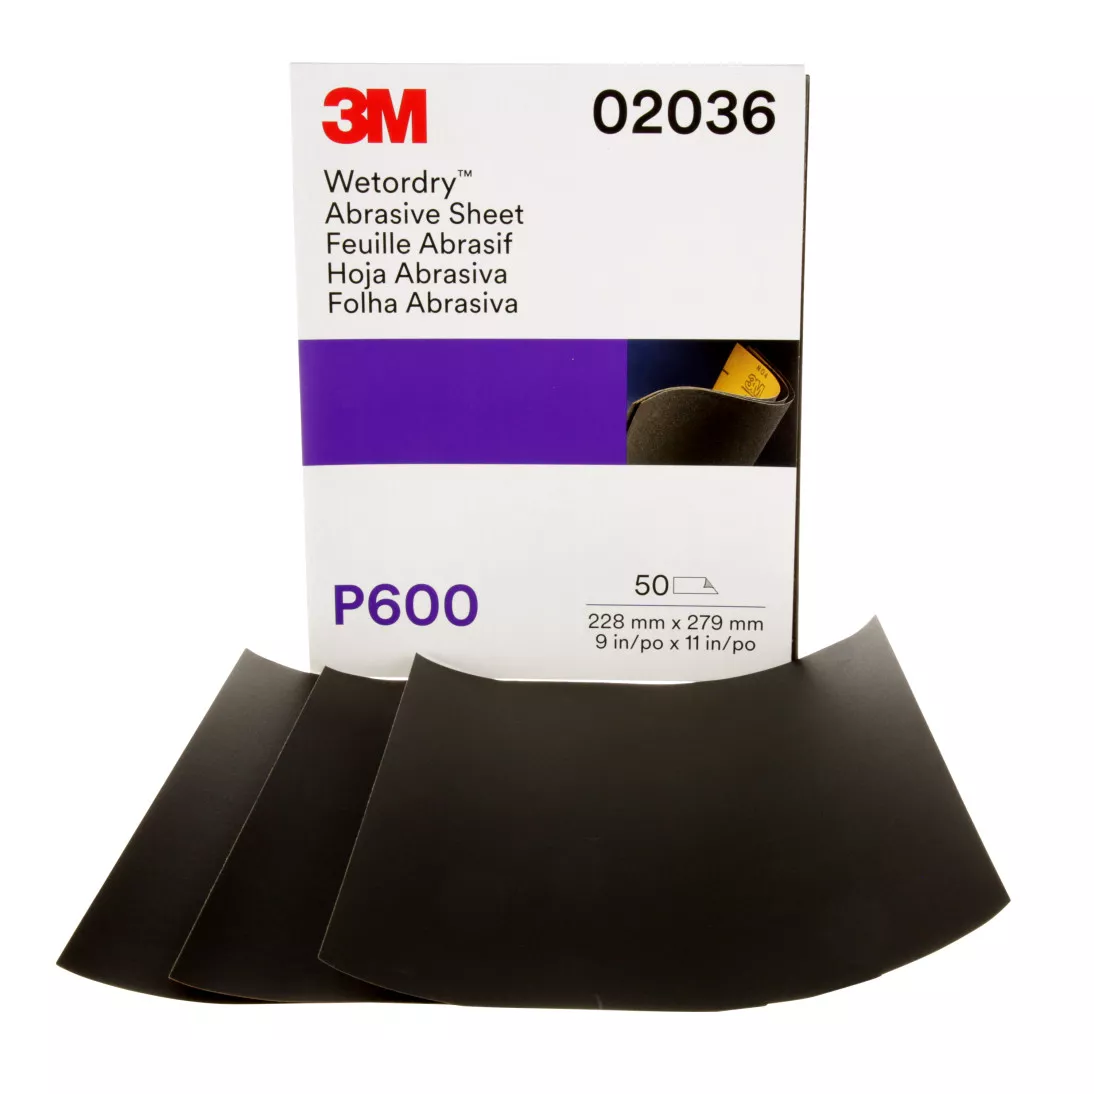 3M™ Wetordry™ Abrasive Sheet 213Q, 02036, P600, 9 in x 11 in, 50 sheets
per carton, 5 cartons per case